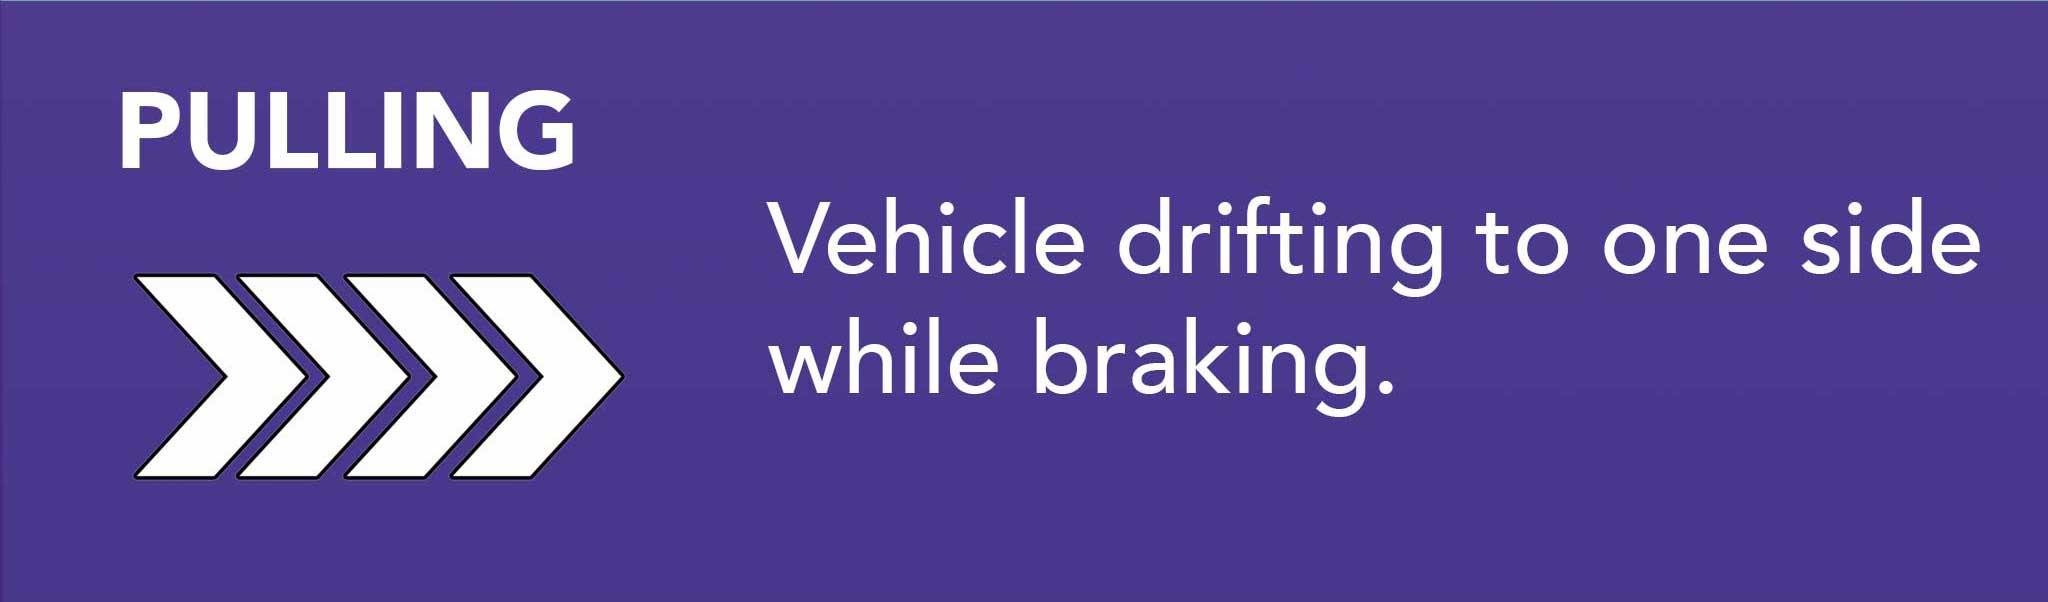 Vehicle drifting to one side while braking.